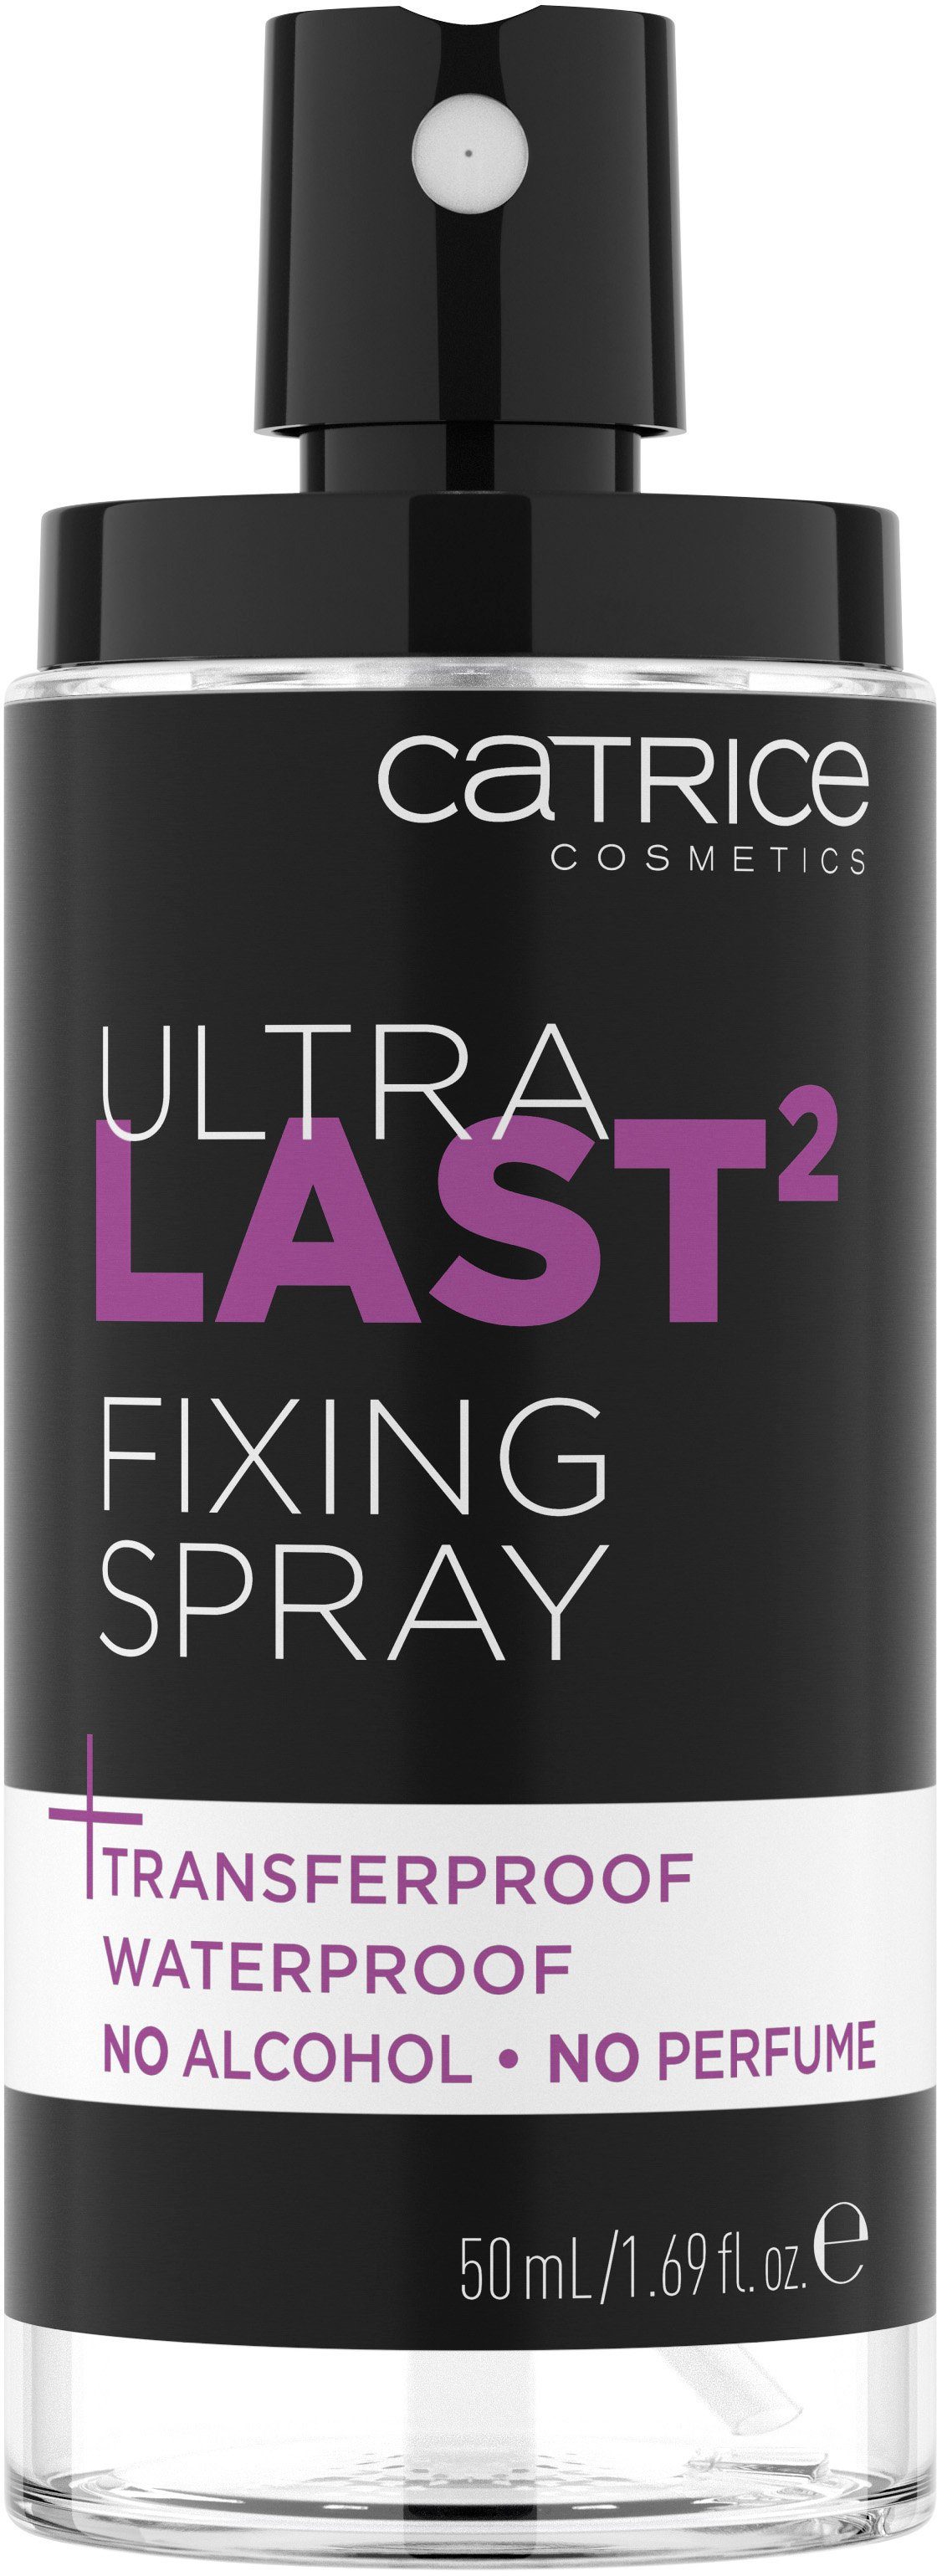 Ultra Spray, 3-tlg. Fixierspray Fixing Last2 Catrice